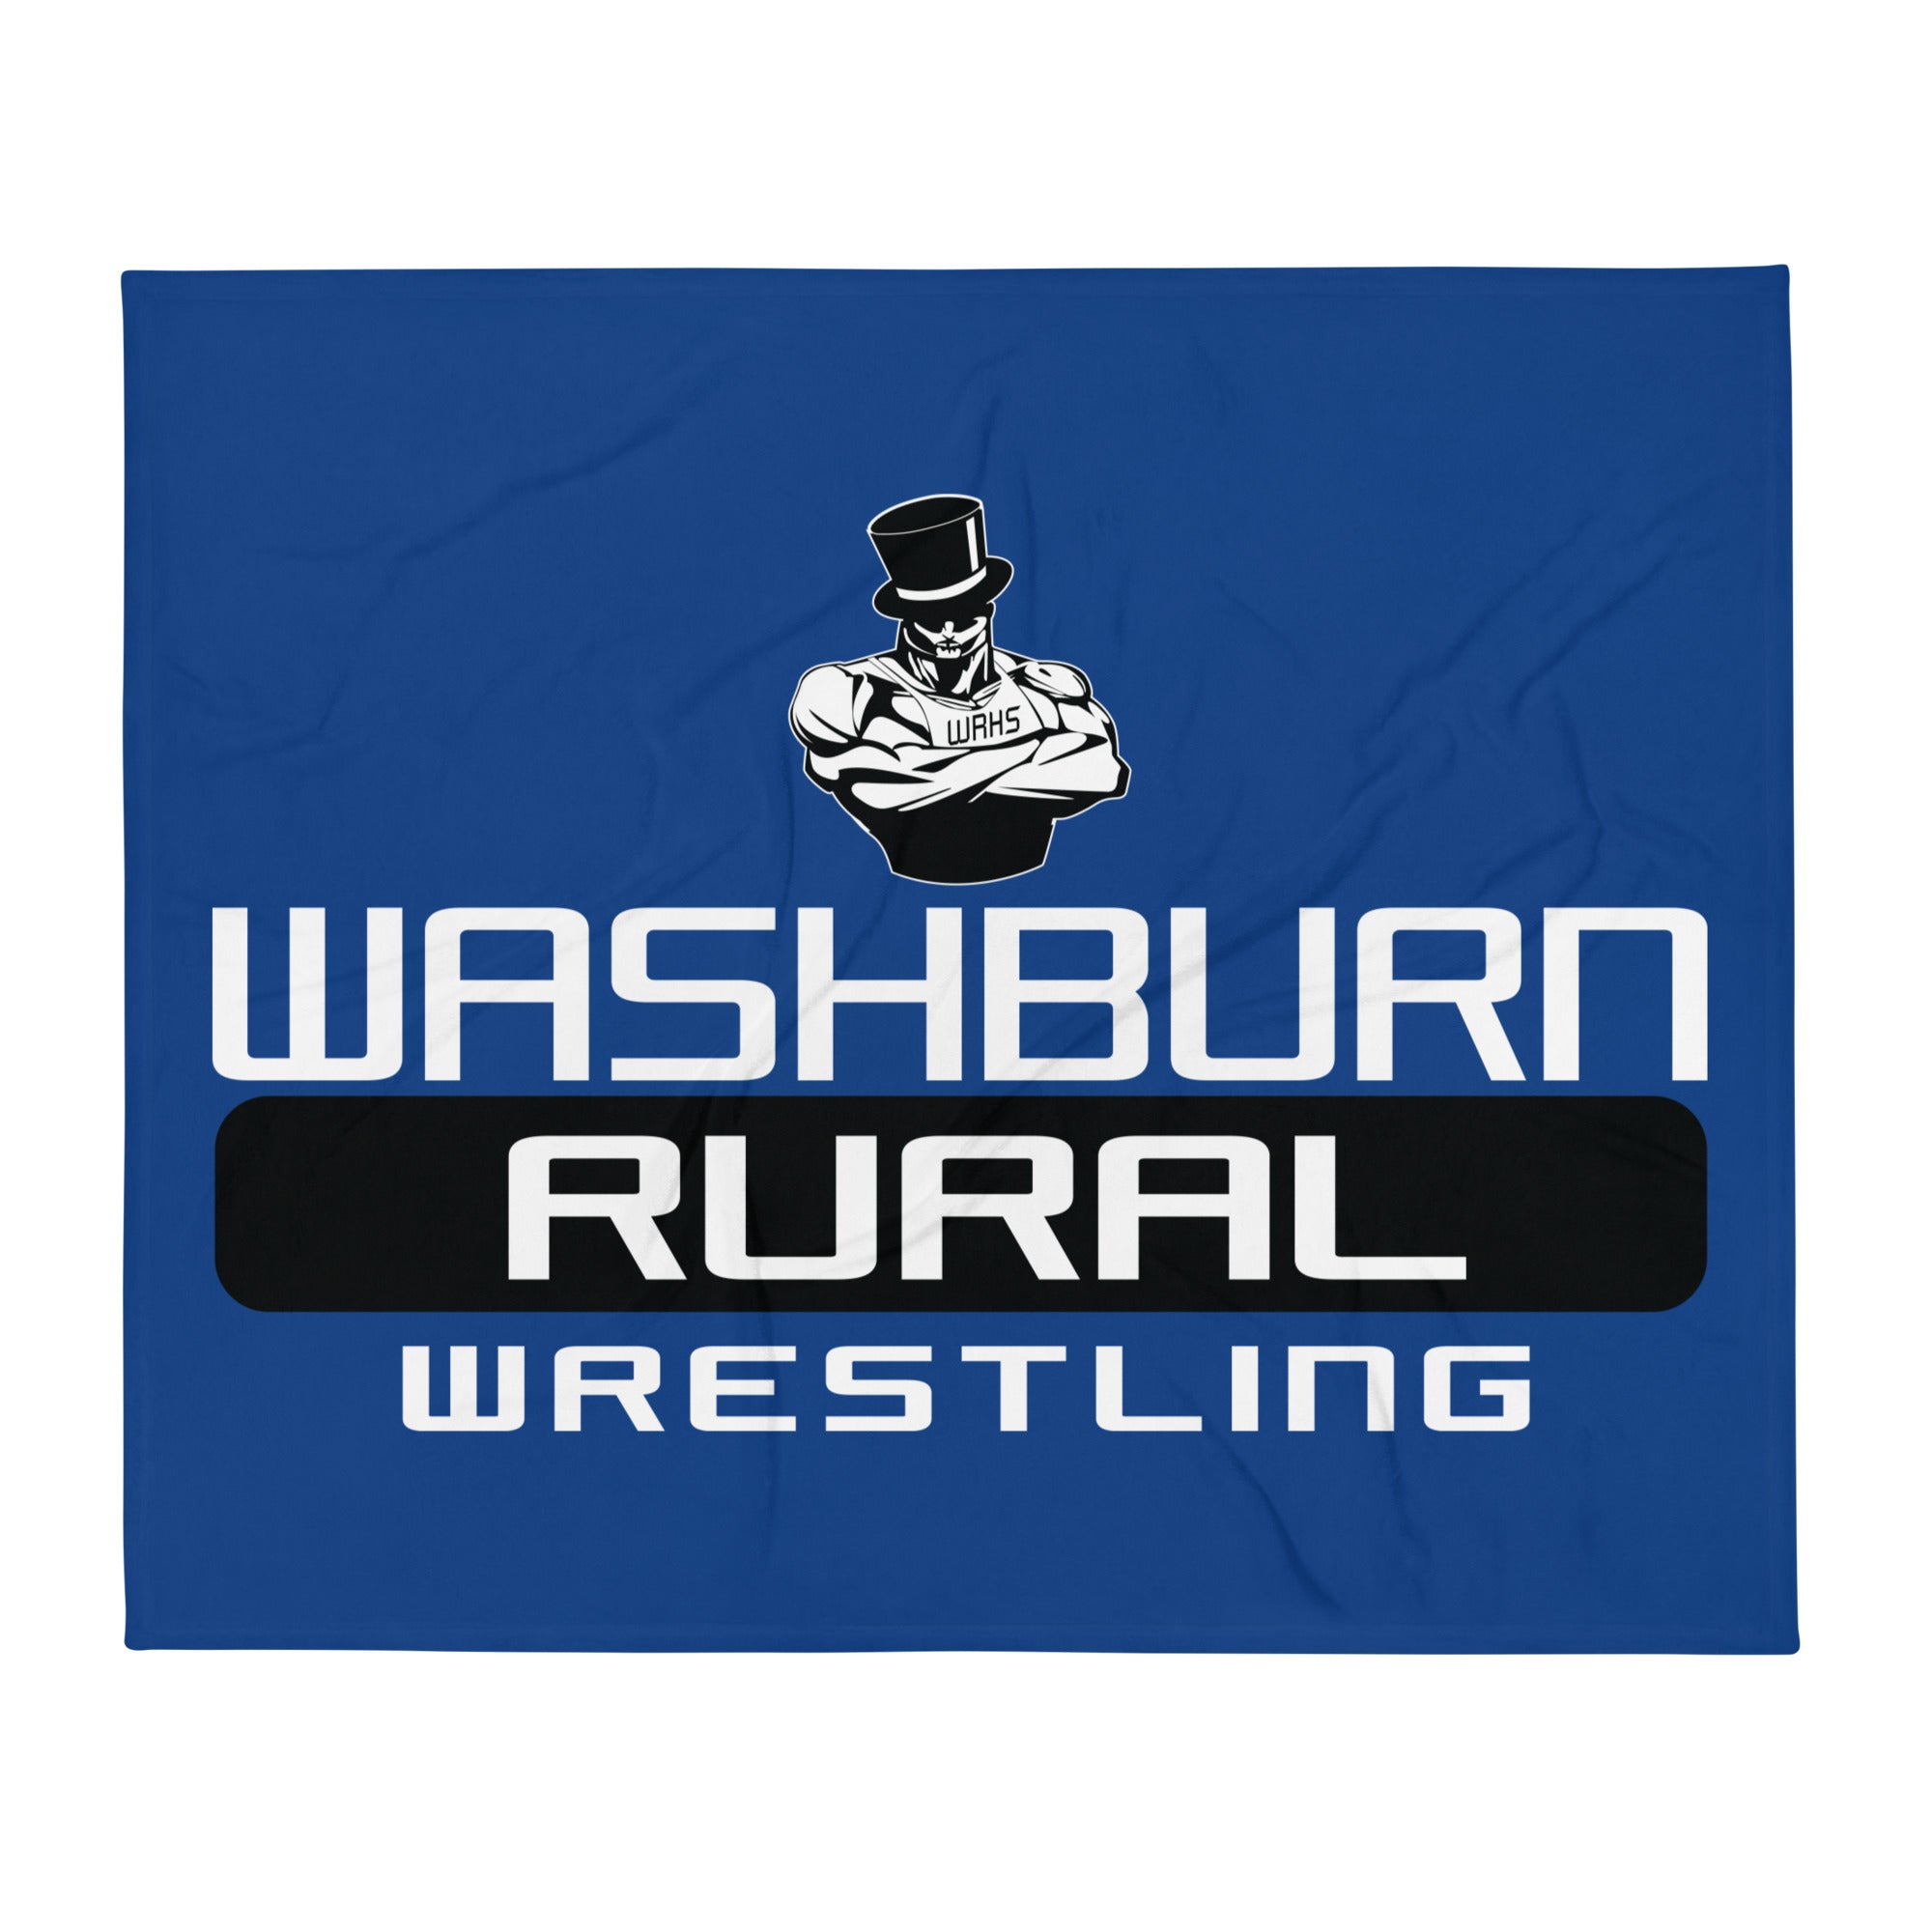 Washburn Rural Wrestling Throw Blanket